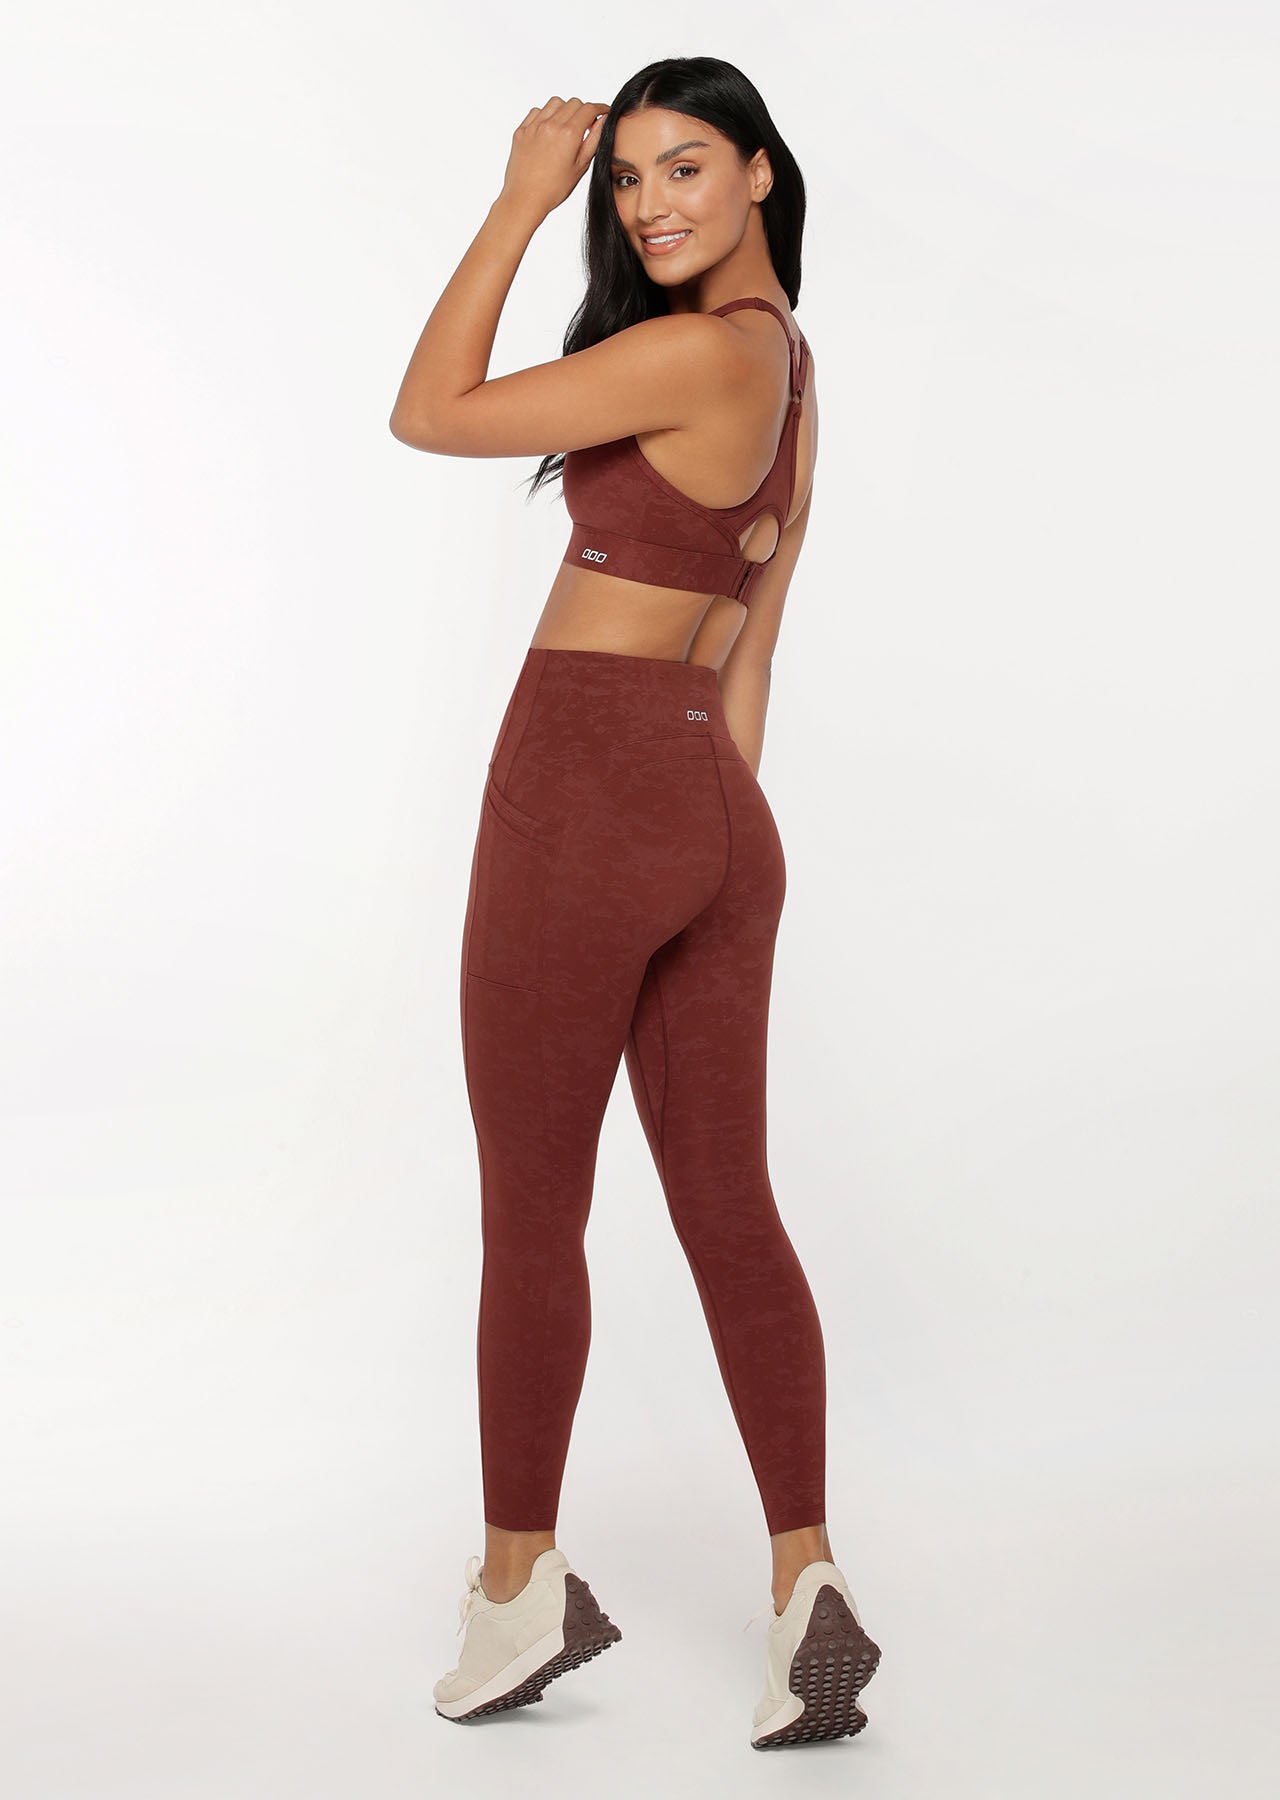 Buy Cloth Bites Women Cotton Lycra Trouser (Medium, Dark Rose) at Amazon.in